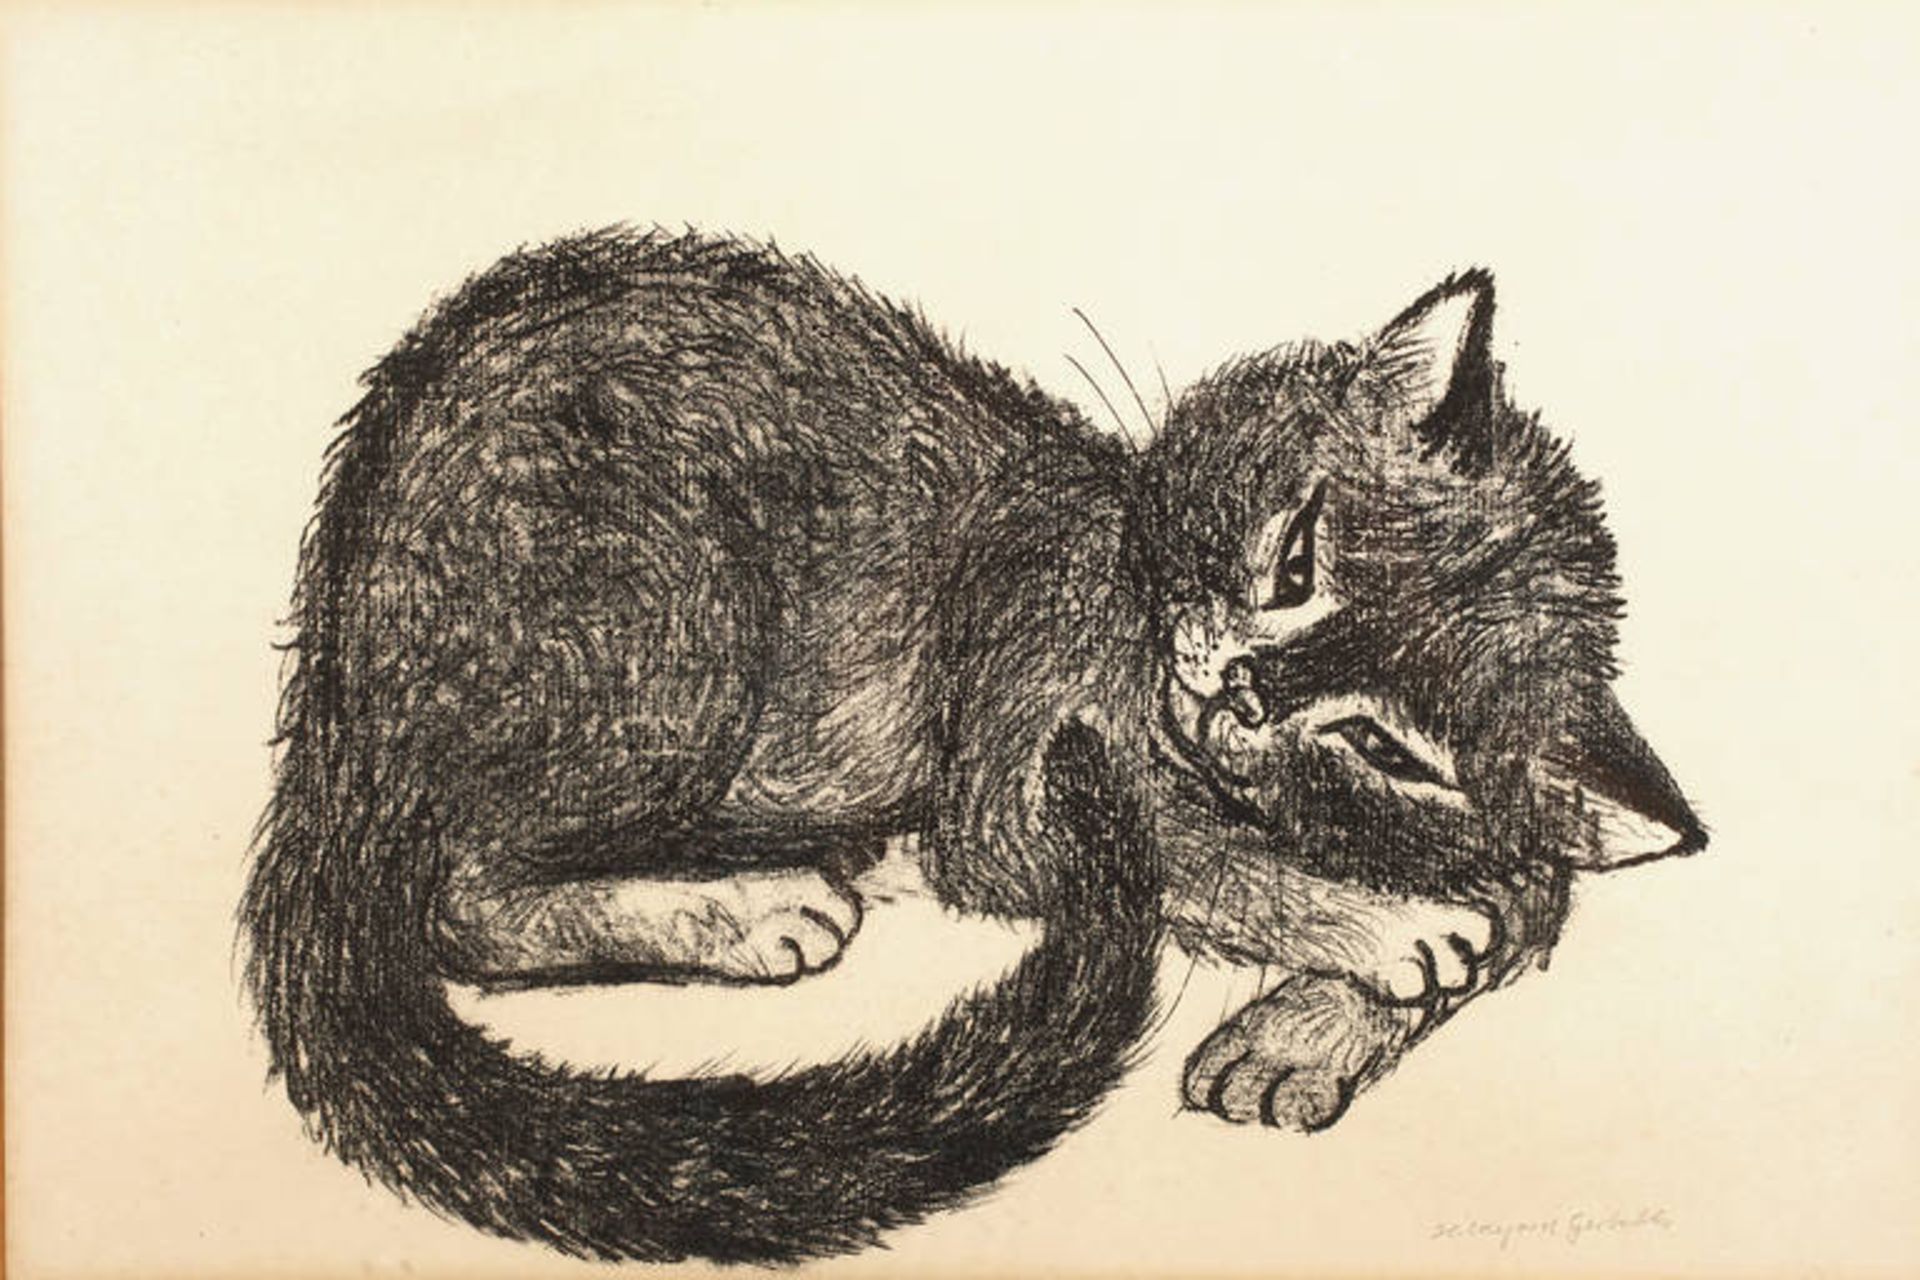 Hildegard Gerbeth, junge Katze drolliges junges Kätzchen, kindgerechte Darstellung, Litho, um